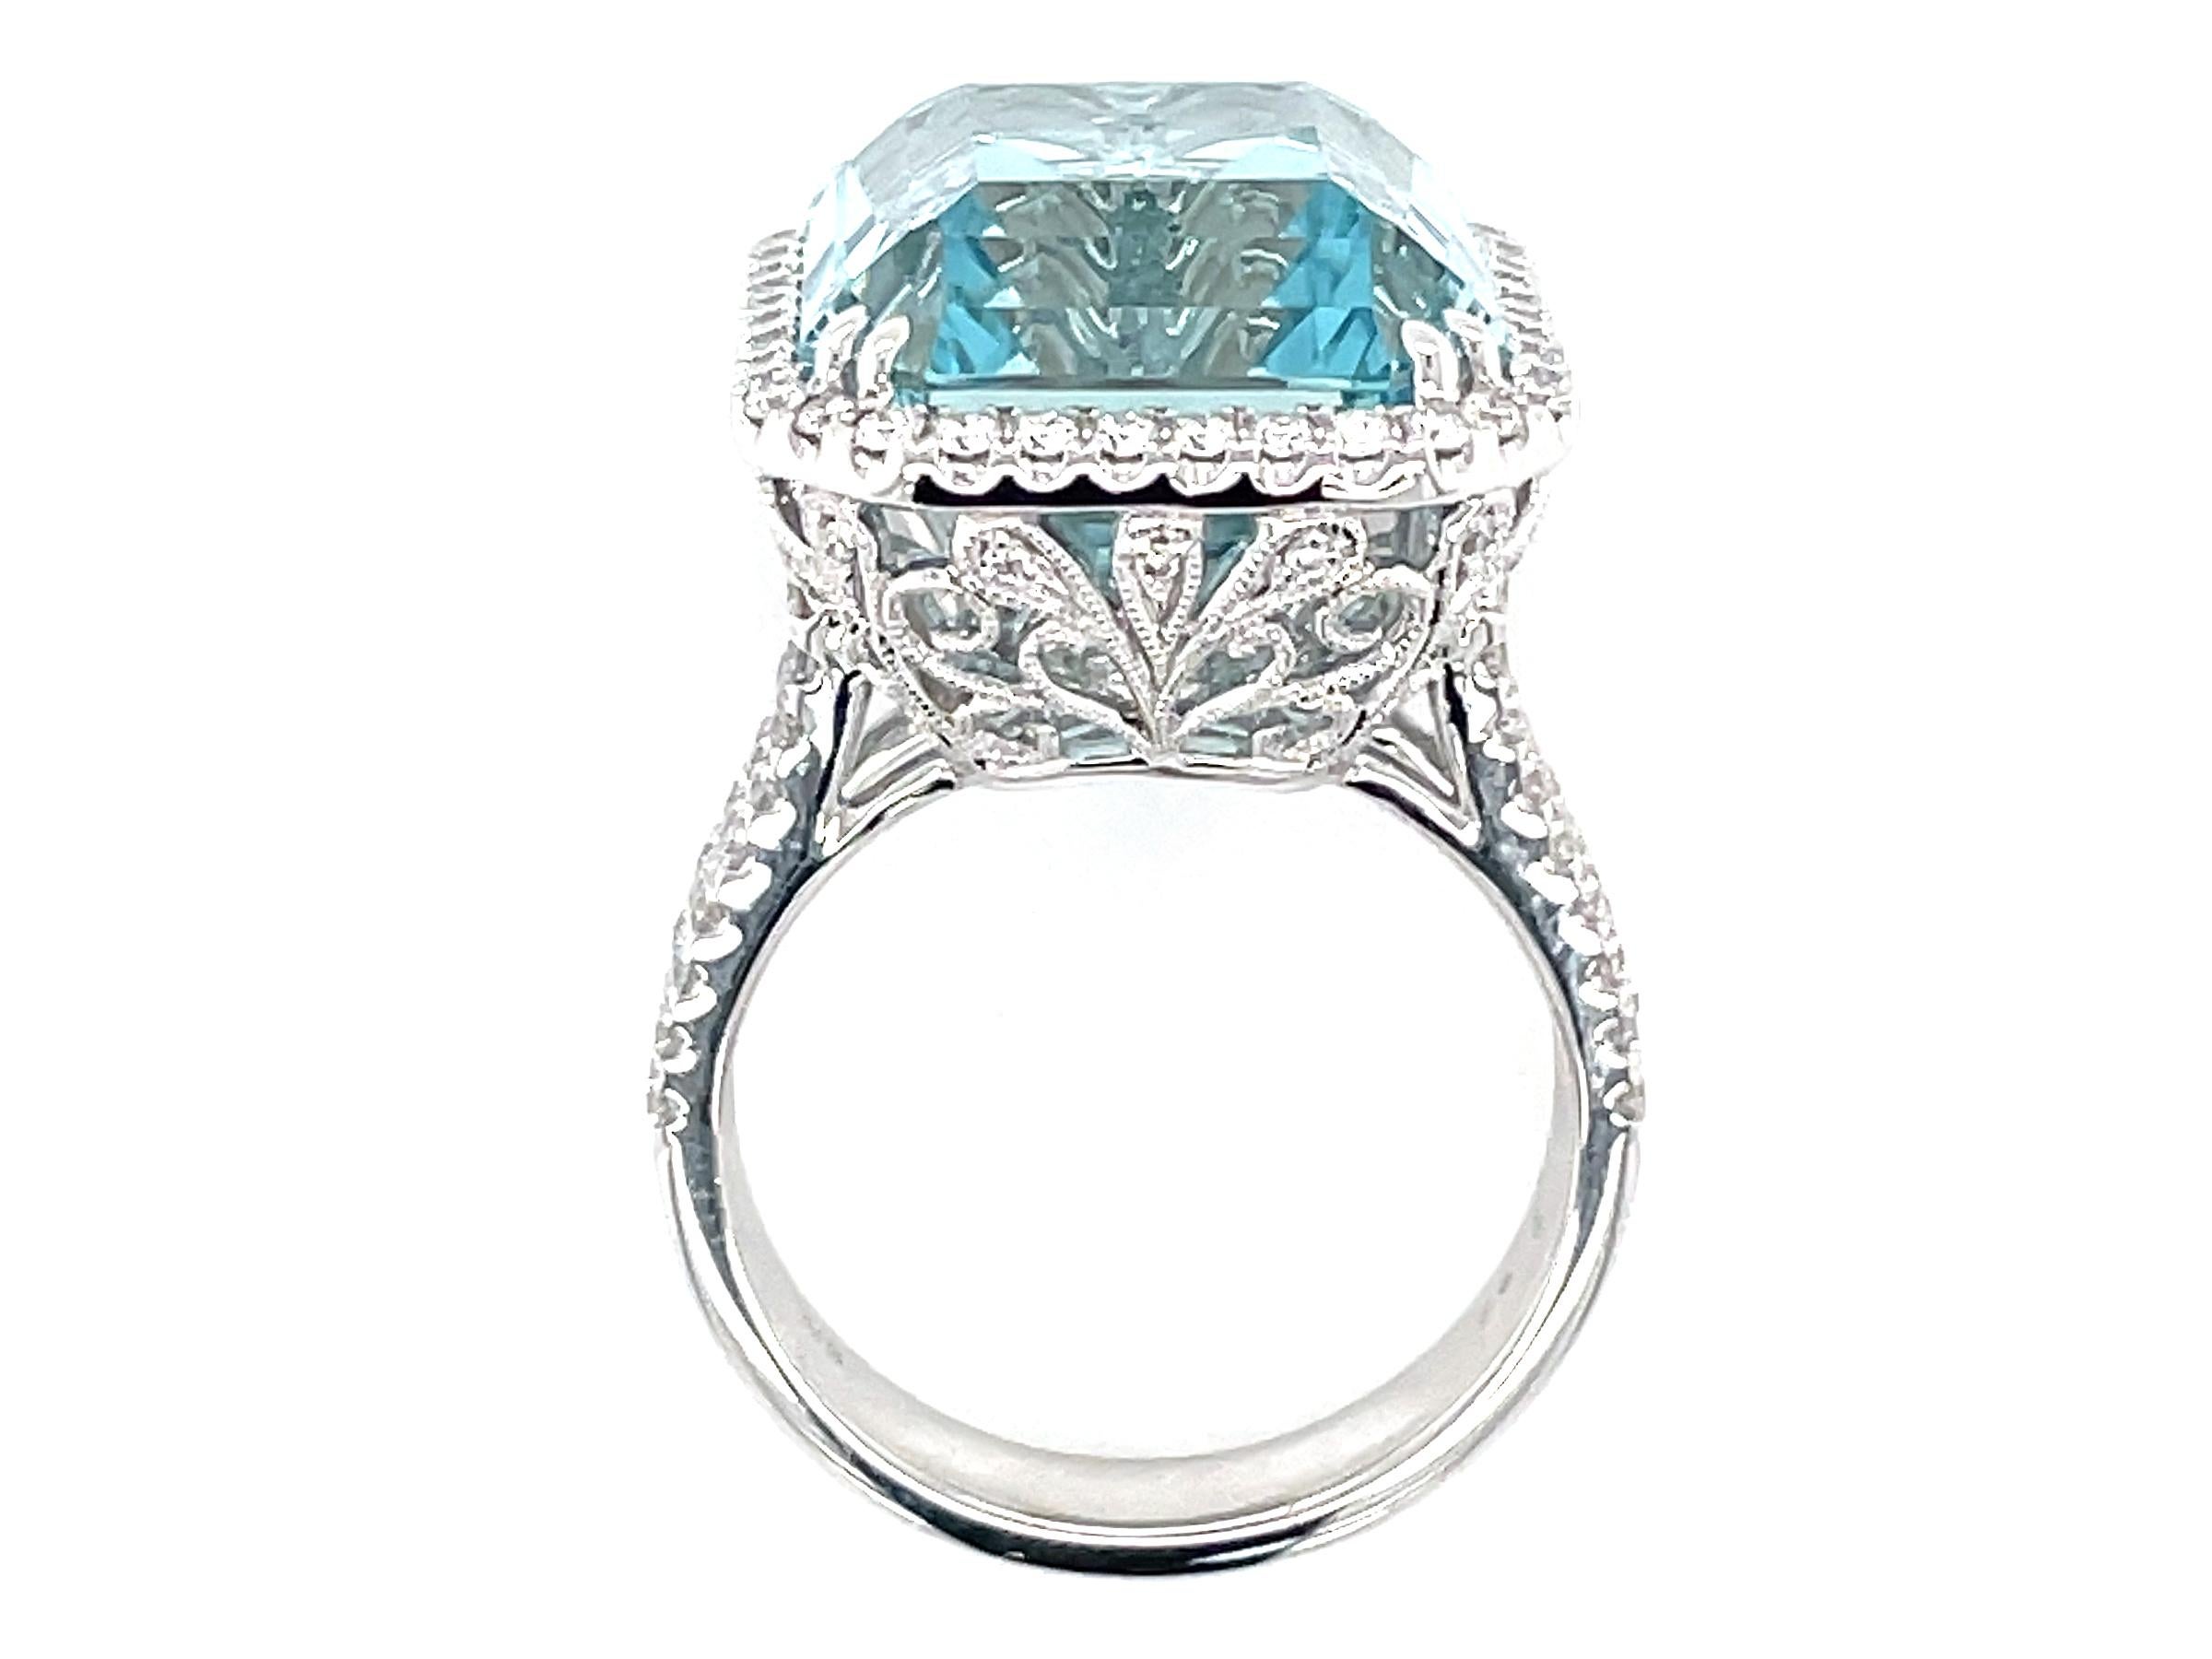 16.79 Carat Emerald Cut Aquamarine and Diamond Cocktail Ring For Sale 4